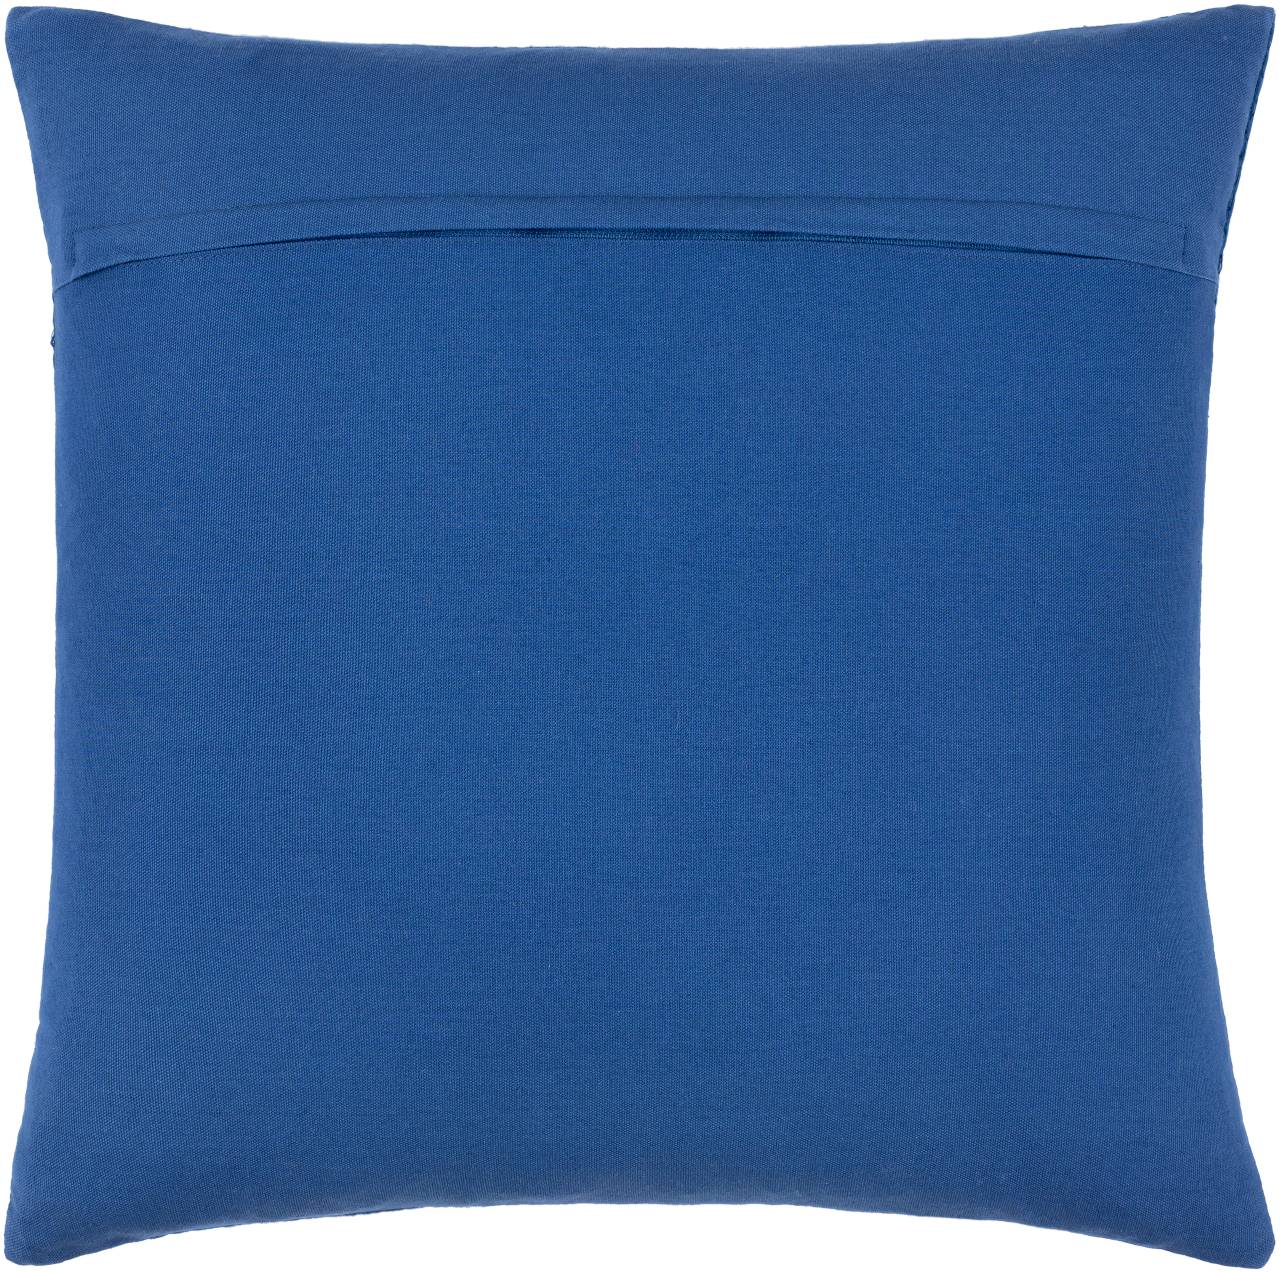 Ichtegem Bright Blue Pillow Cover